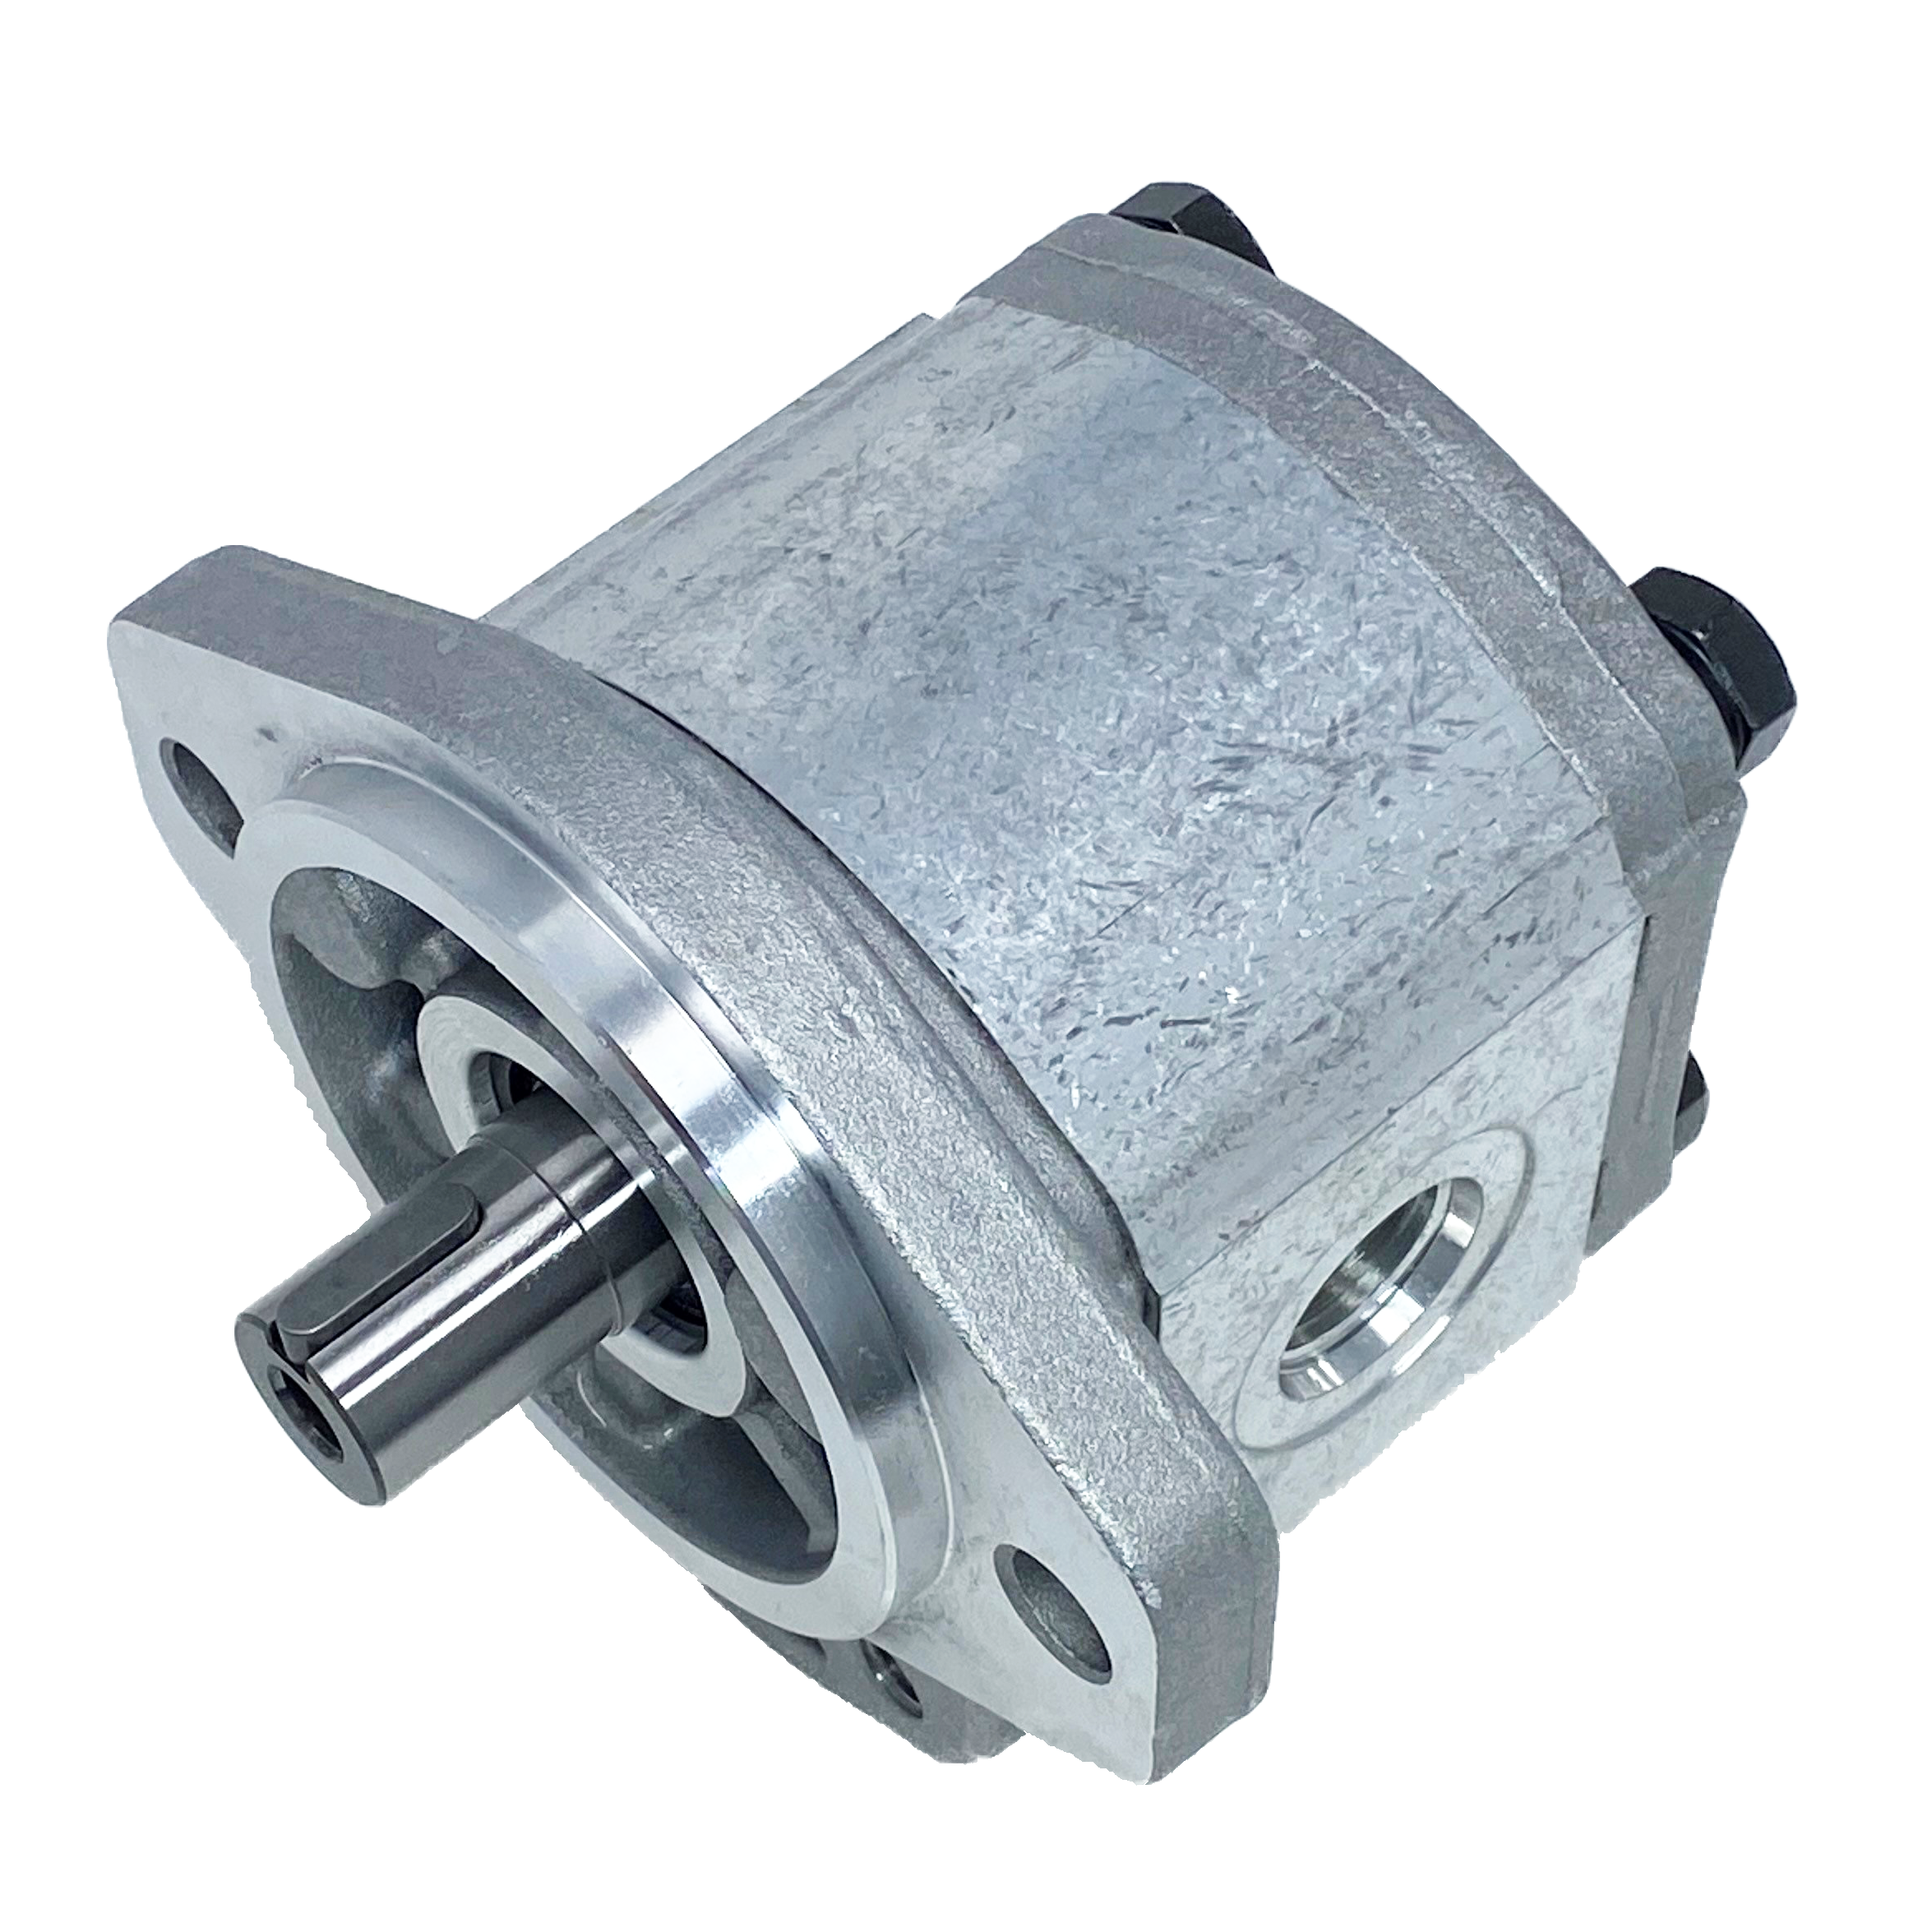 PLM20.8R0-50S1-LOC/OC-N-EL : Casappa Polaris Gear Motor, 8.26cc, 3625psi Rated, 3500RPM, Reversible Rear External Drain, 3/4" Bore x 3/16" Key Shaft, SAE A 2-Bolt Flange, 0.625 (5/8") #10 SAE Inlet, 0.625 (5/8") #10 SAE Outlet, Aluminum Body & Flange